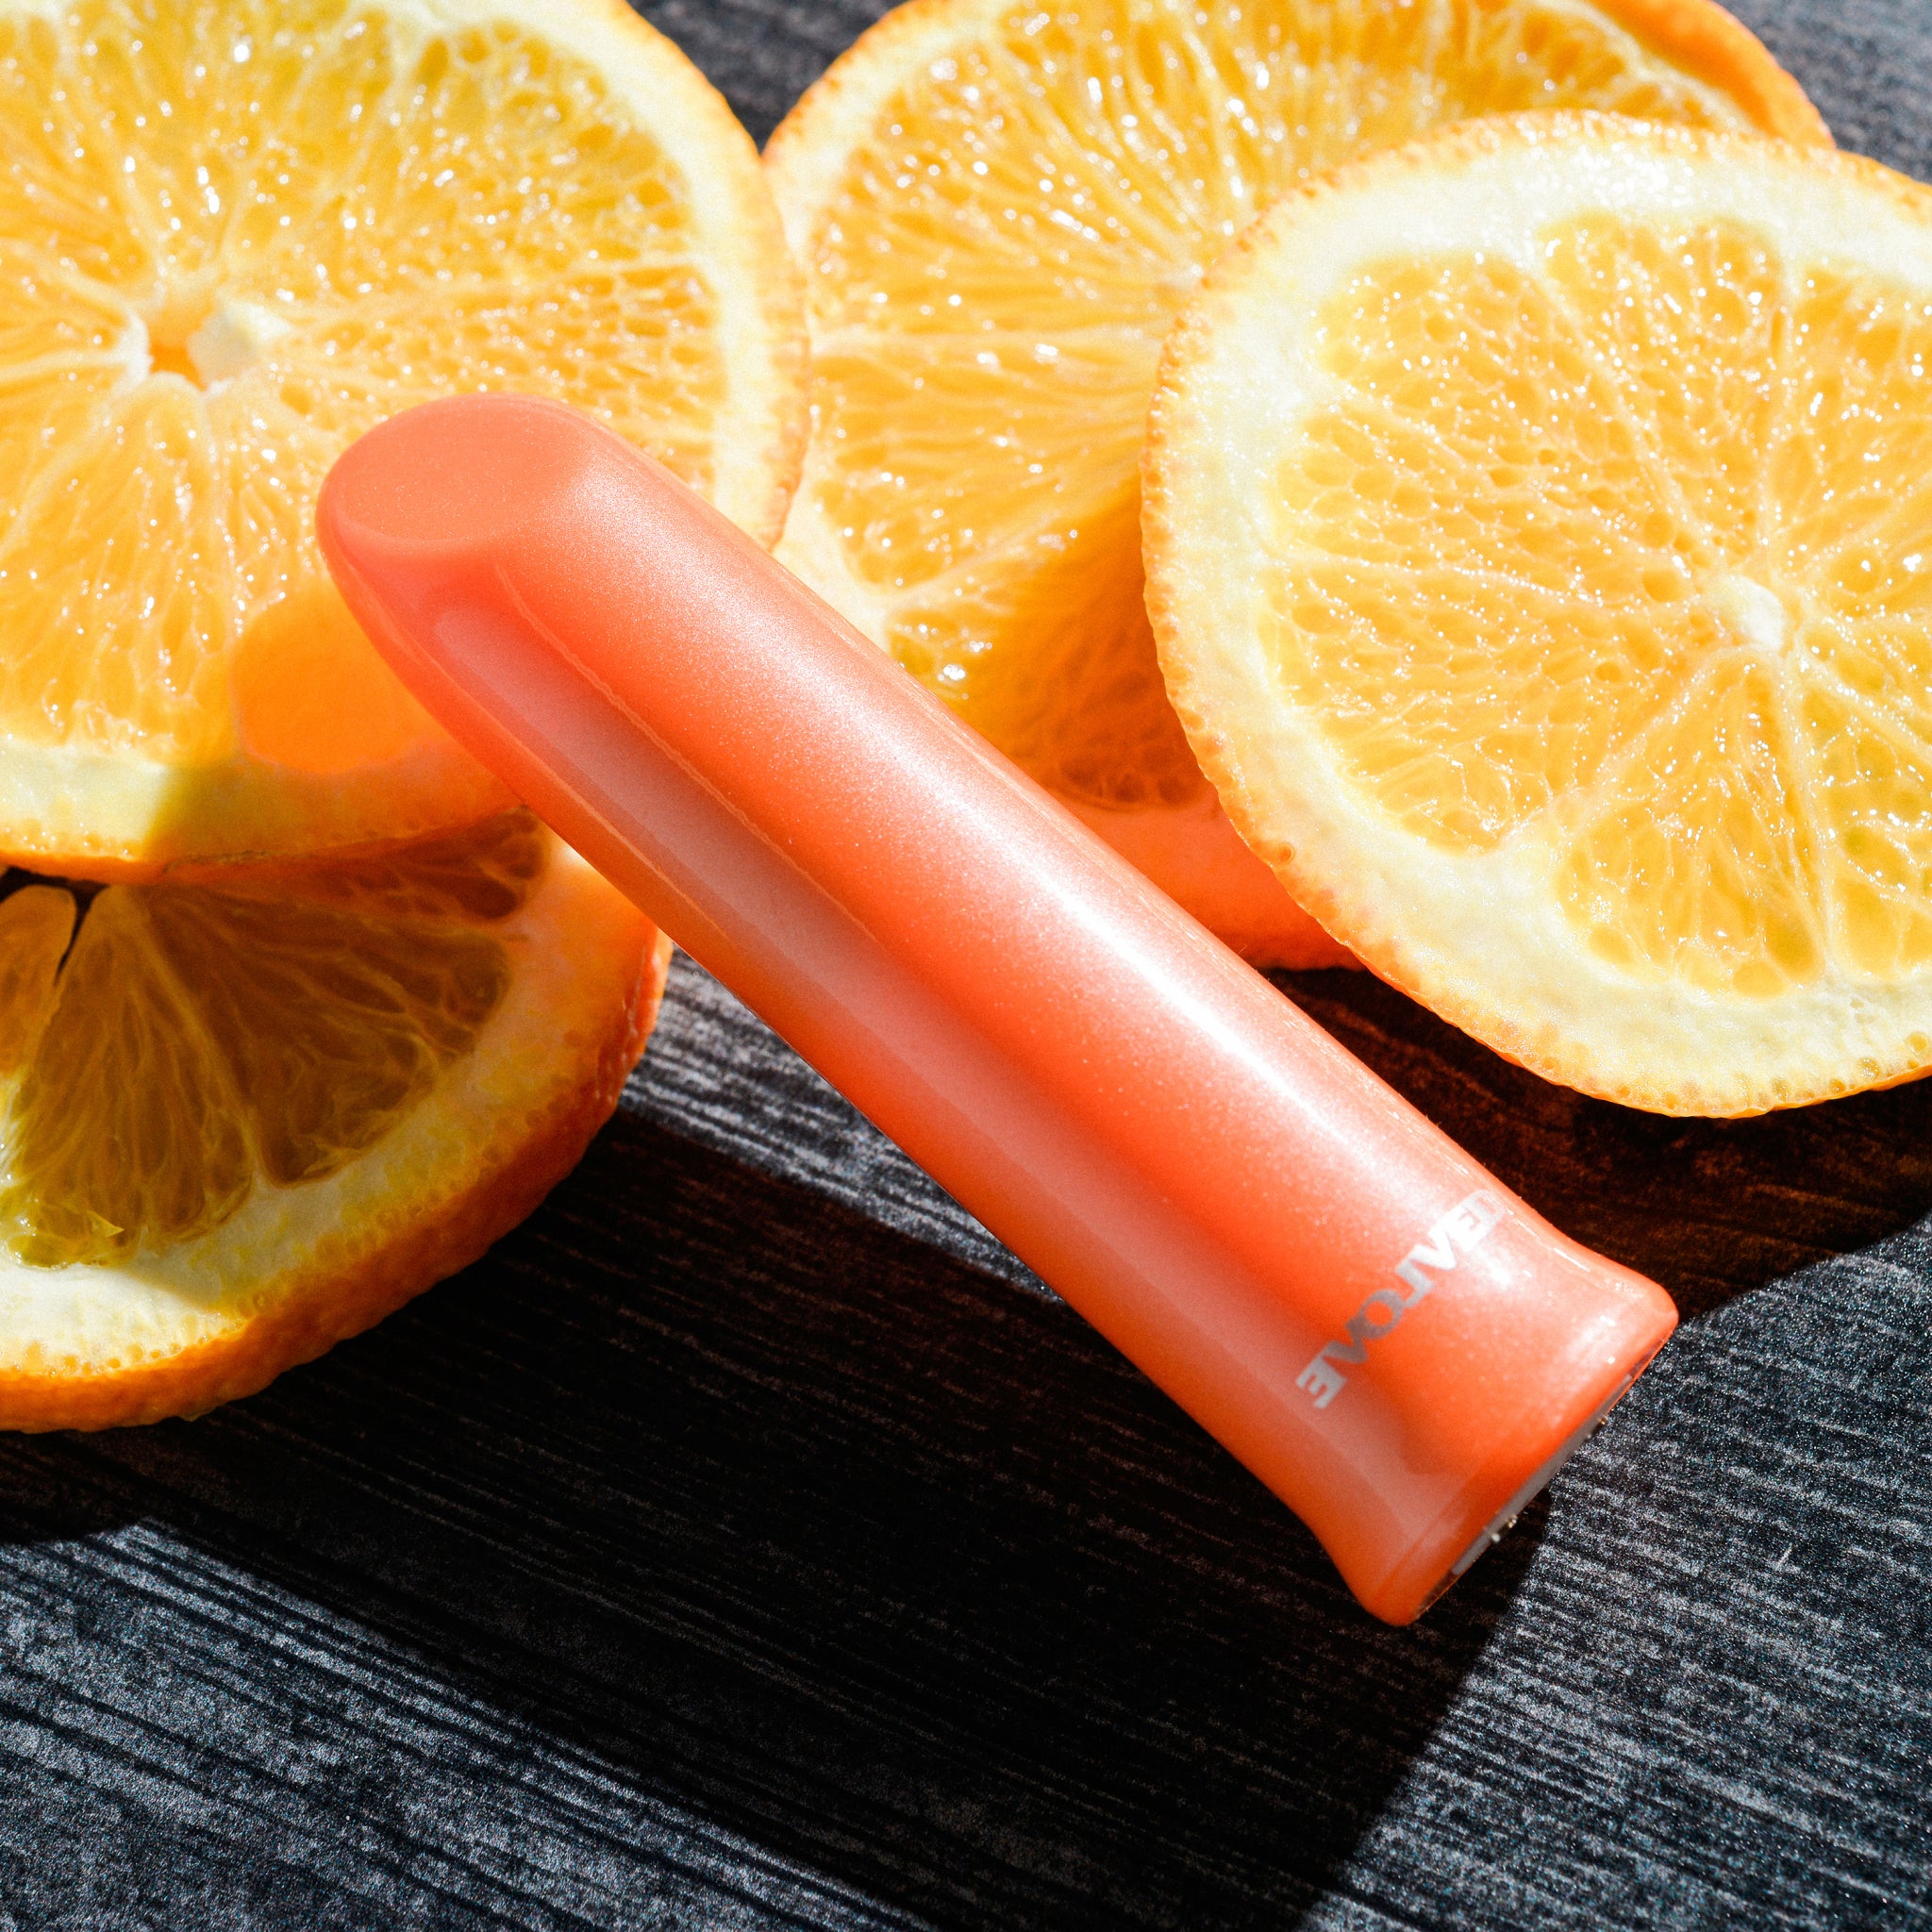 Evolved Lip Service - Orange